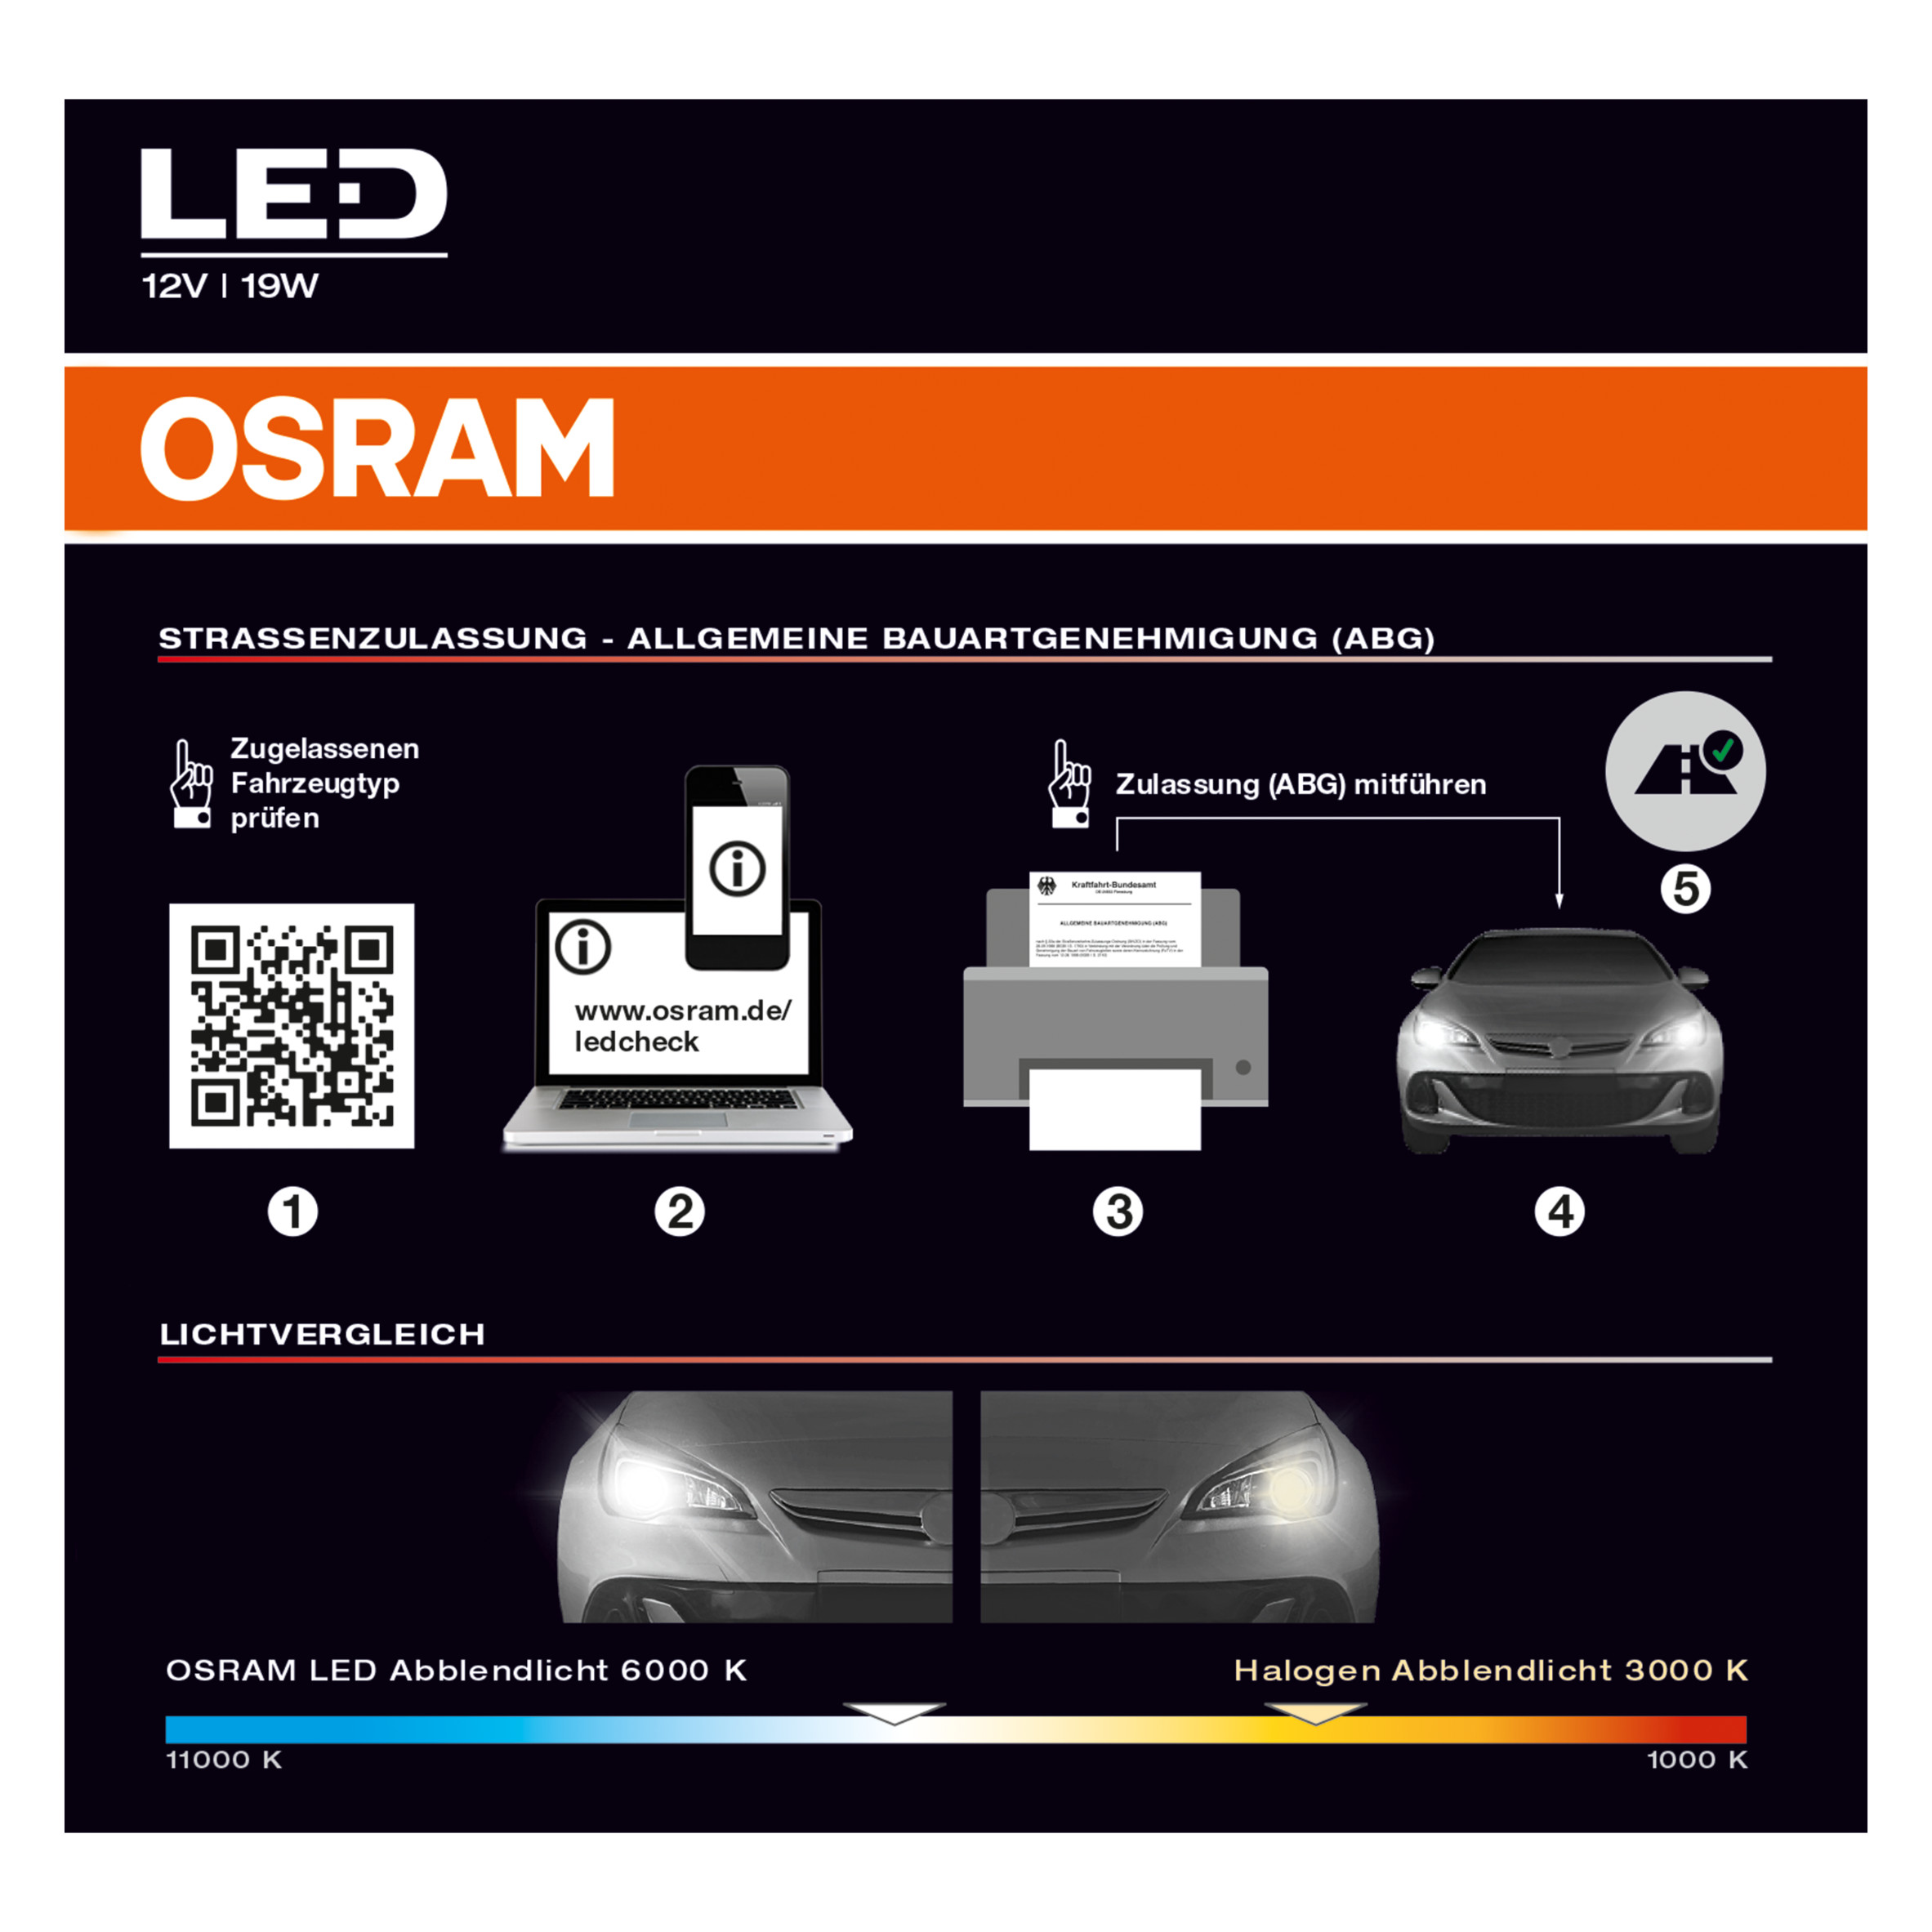 LED SET Innenraum-Licht FIAT DUCATO3 - LED upgrade Fahrzeuge PHILIPS, OSRAM